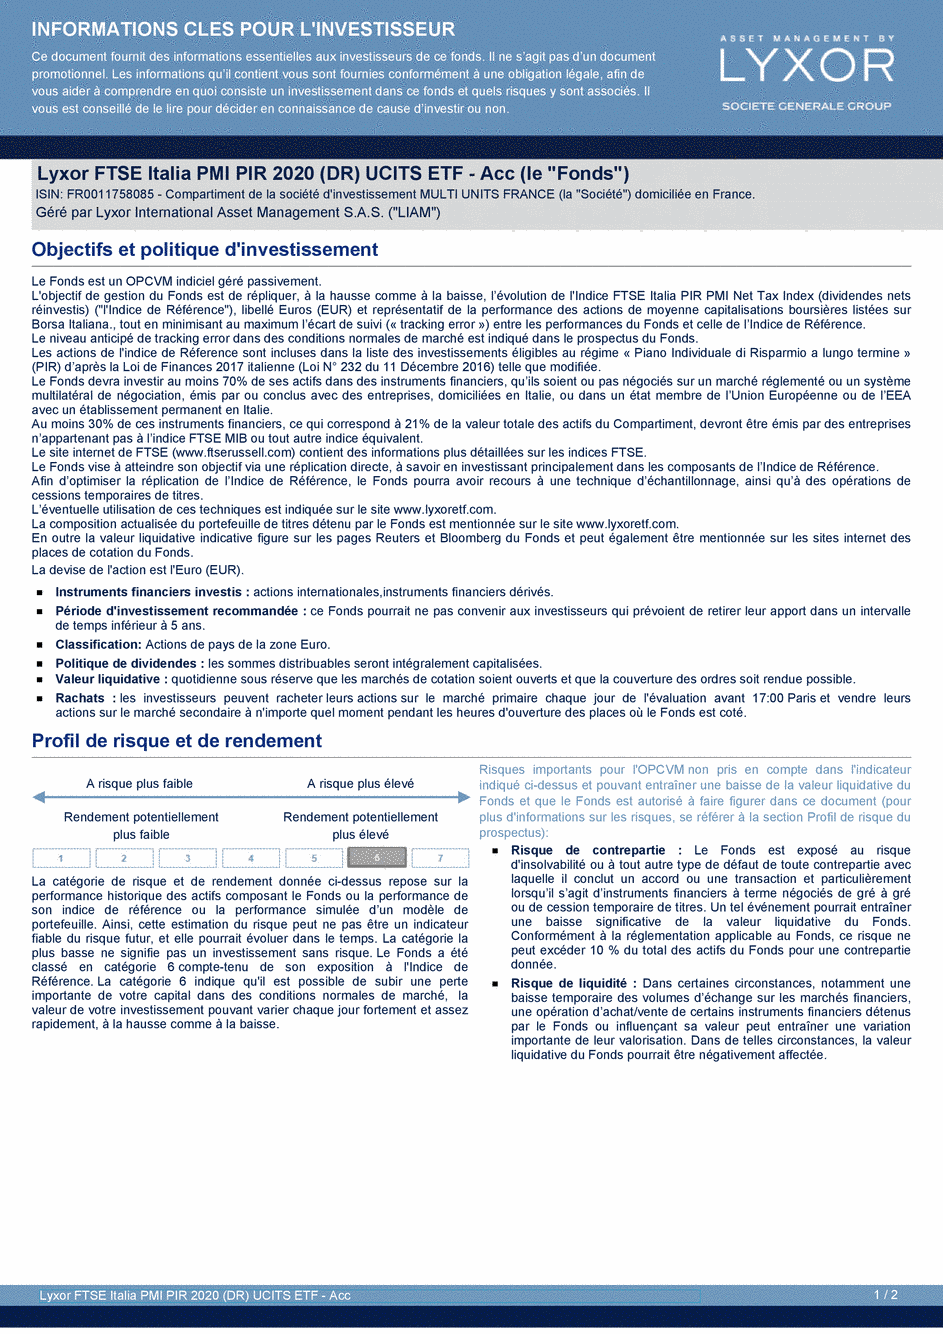 DICI Lyxor FTSE Italia PMI PIR 2020 (DR) UCITS ETF - Acc - 30/03/2020 - Français